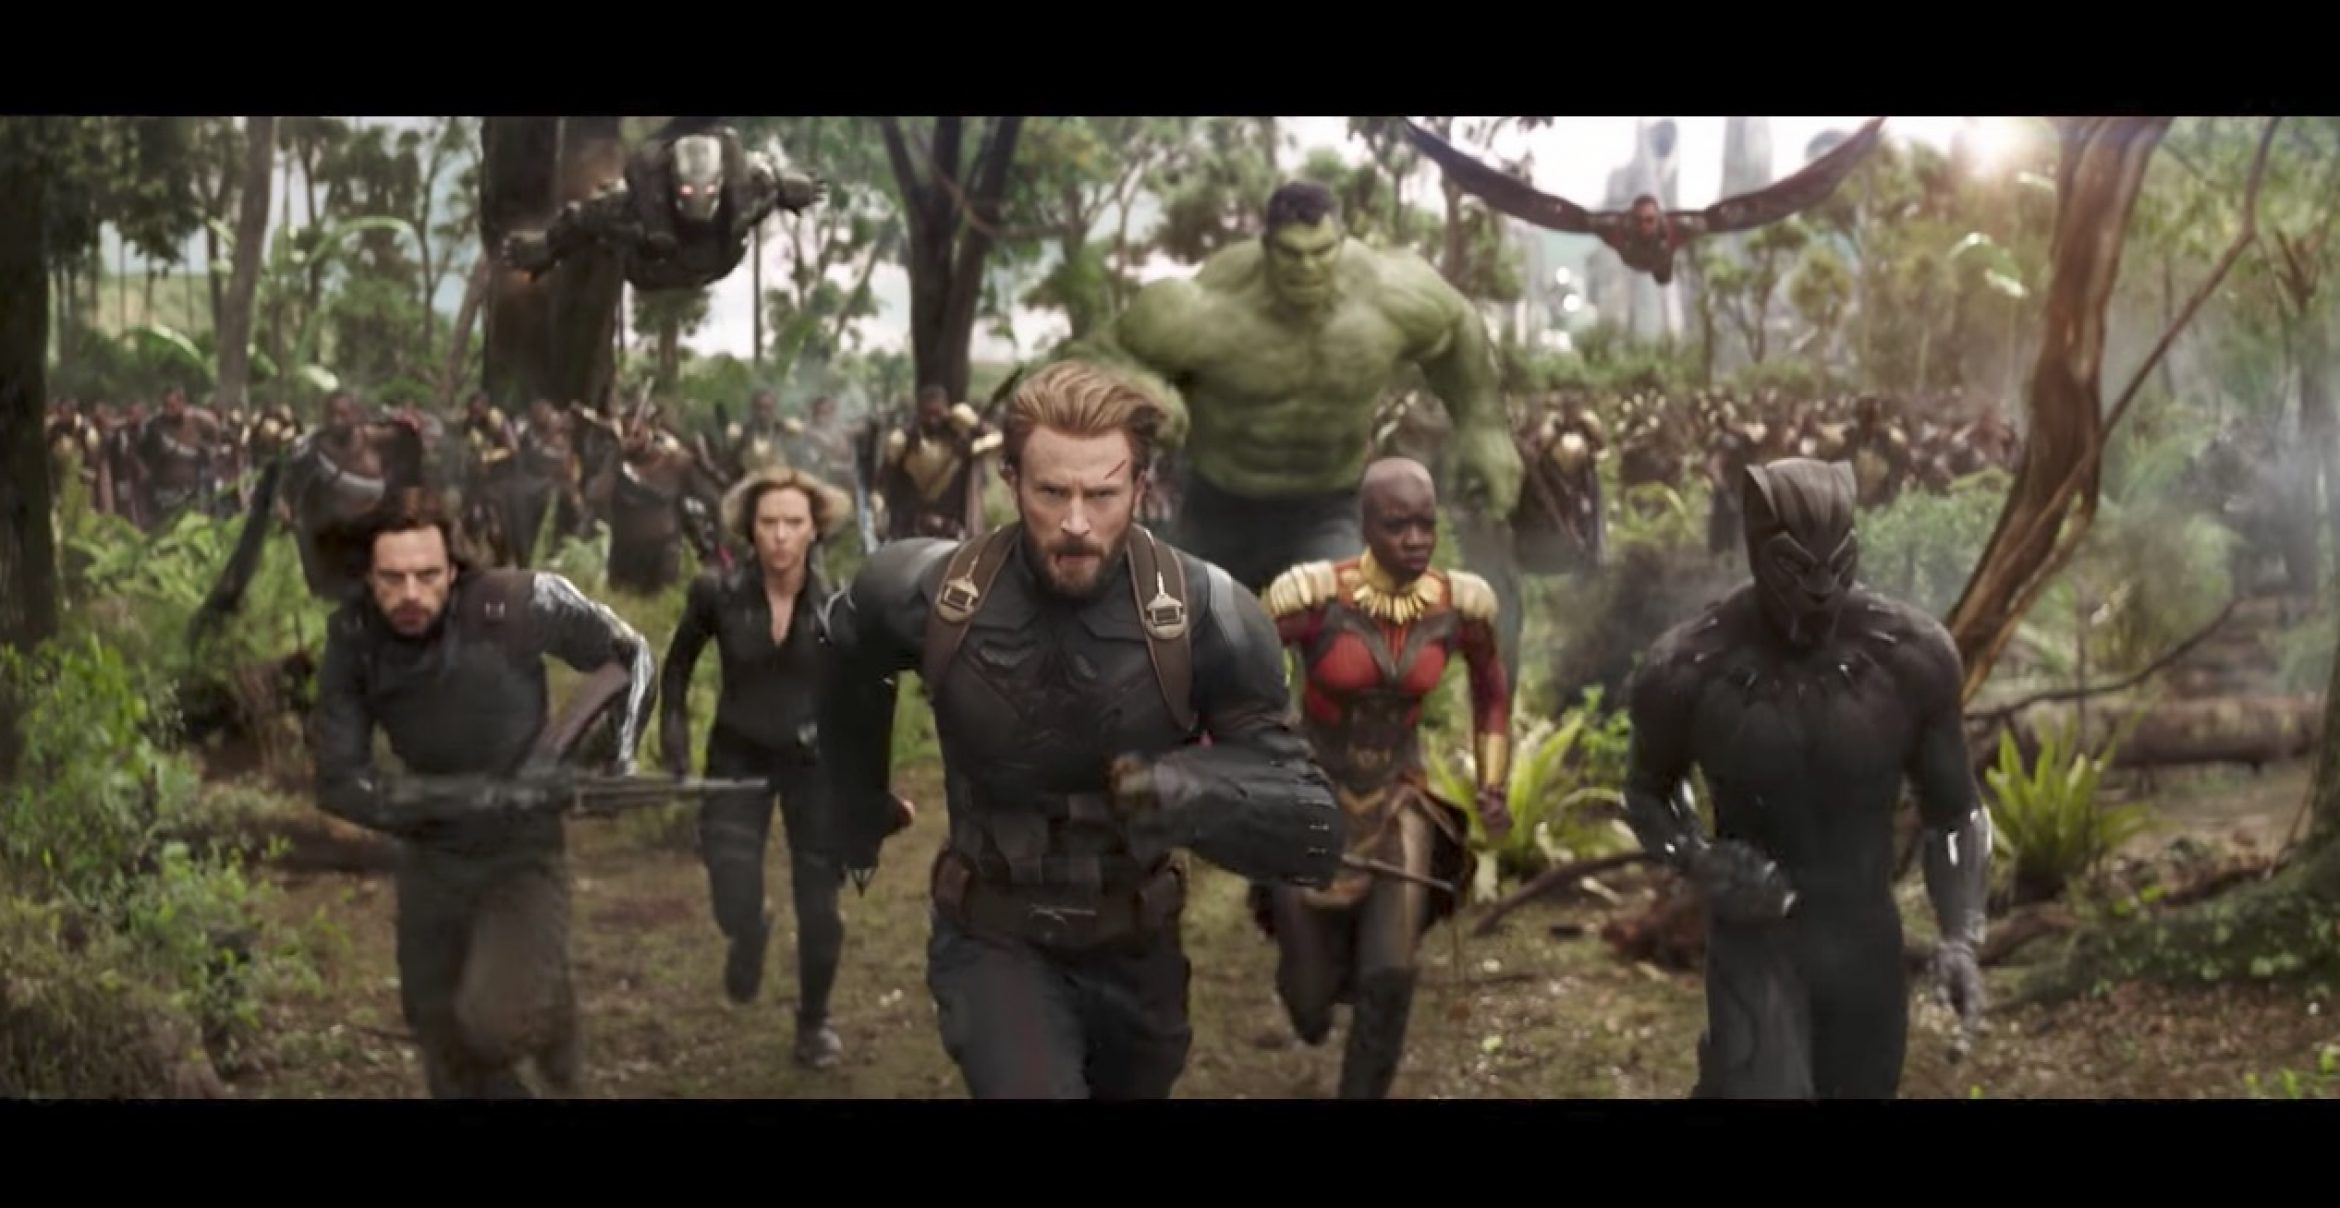 Neuer Trailer zu “Avengers: Infinity War“ ist frisch raus